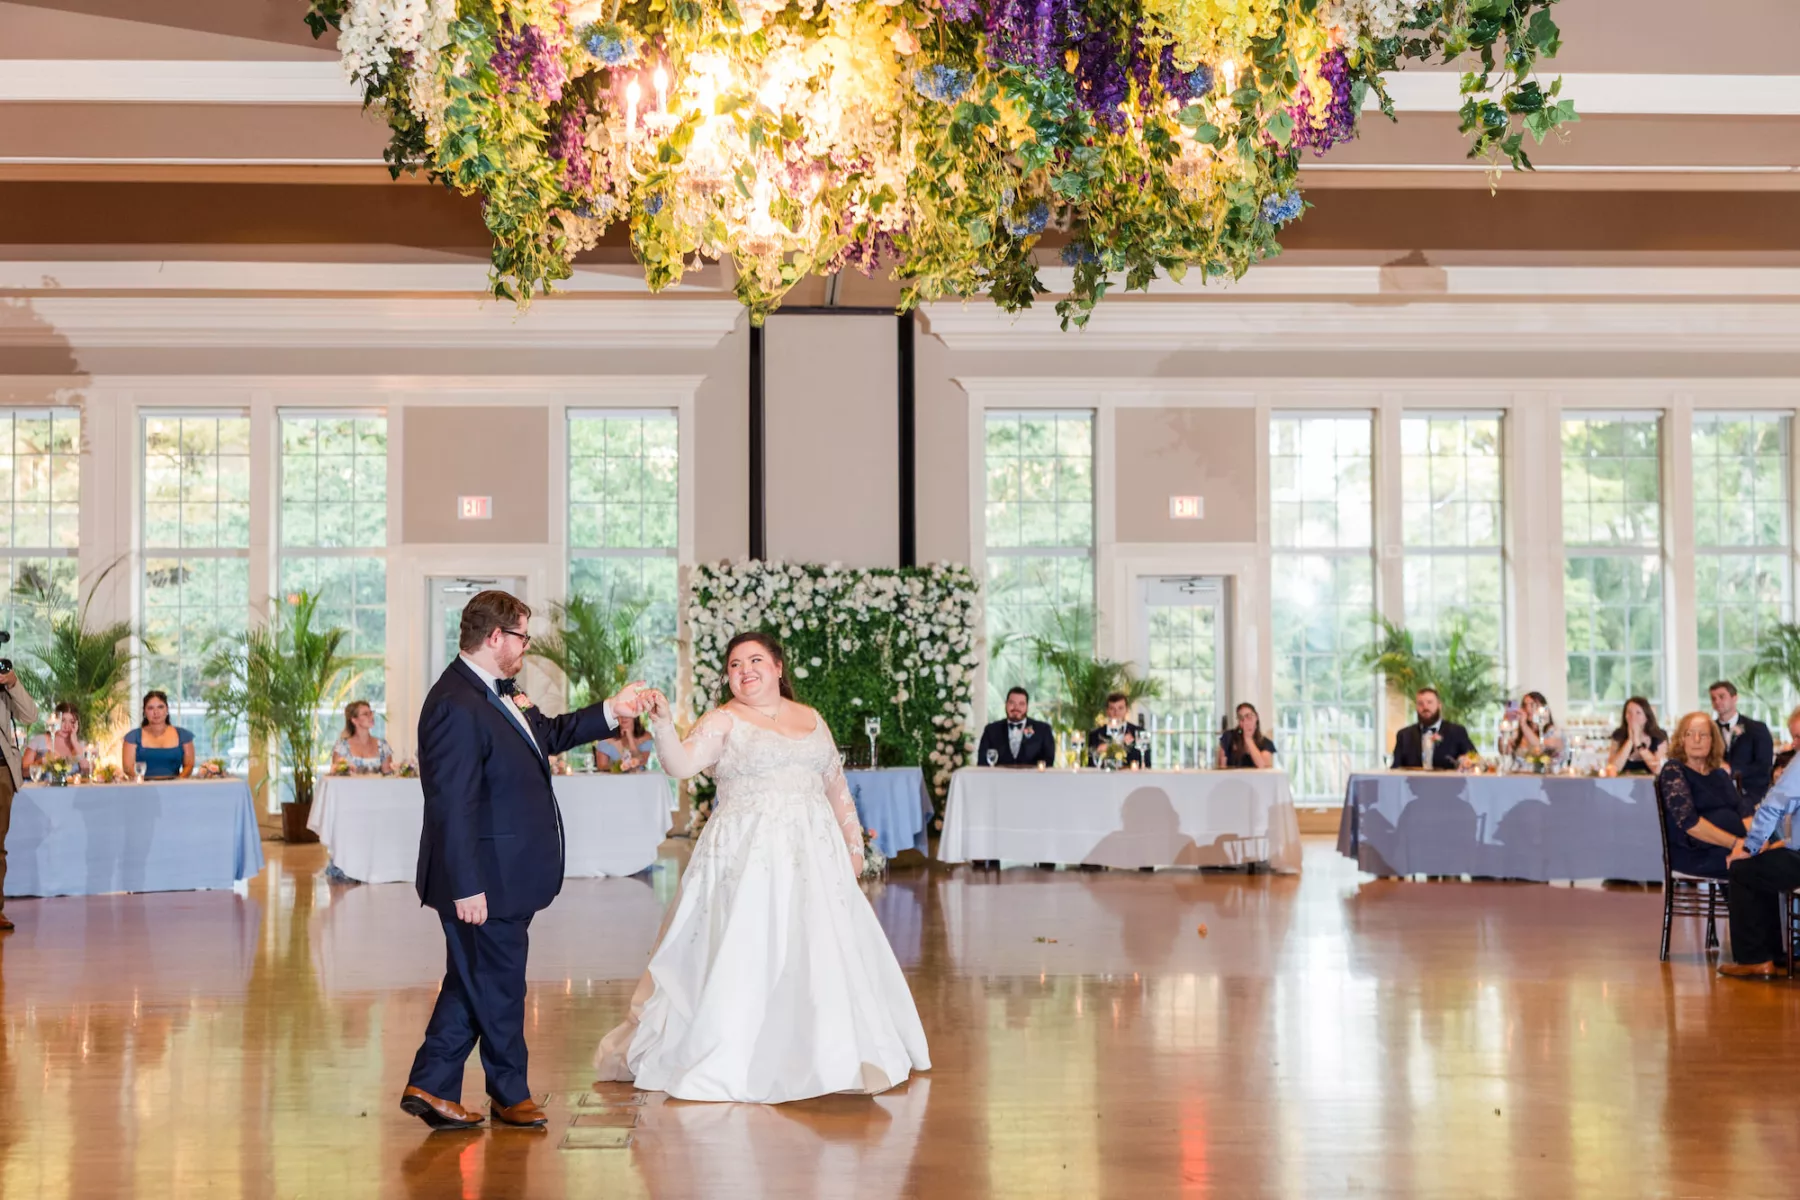 Grande Ballroom Garden Inspired Wedding Reception Ideas | Purple Wisteria, Blue Hydrangeas, and Greenery Floral Chandelier Ideas | Tampa Bay Photographer Mary Anna Photography | Event Venue Higgins Hall